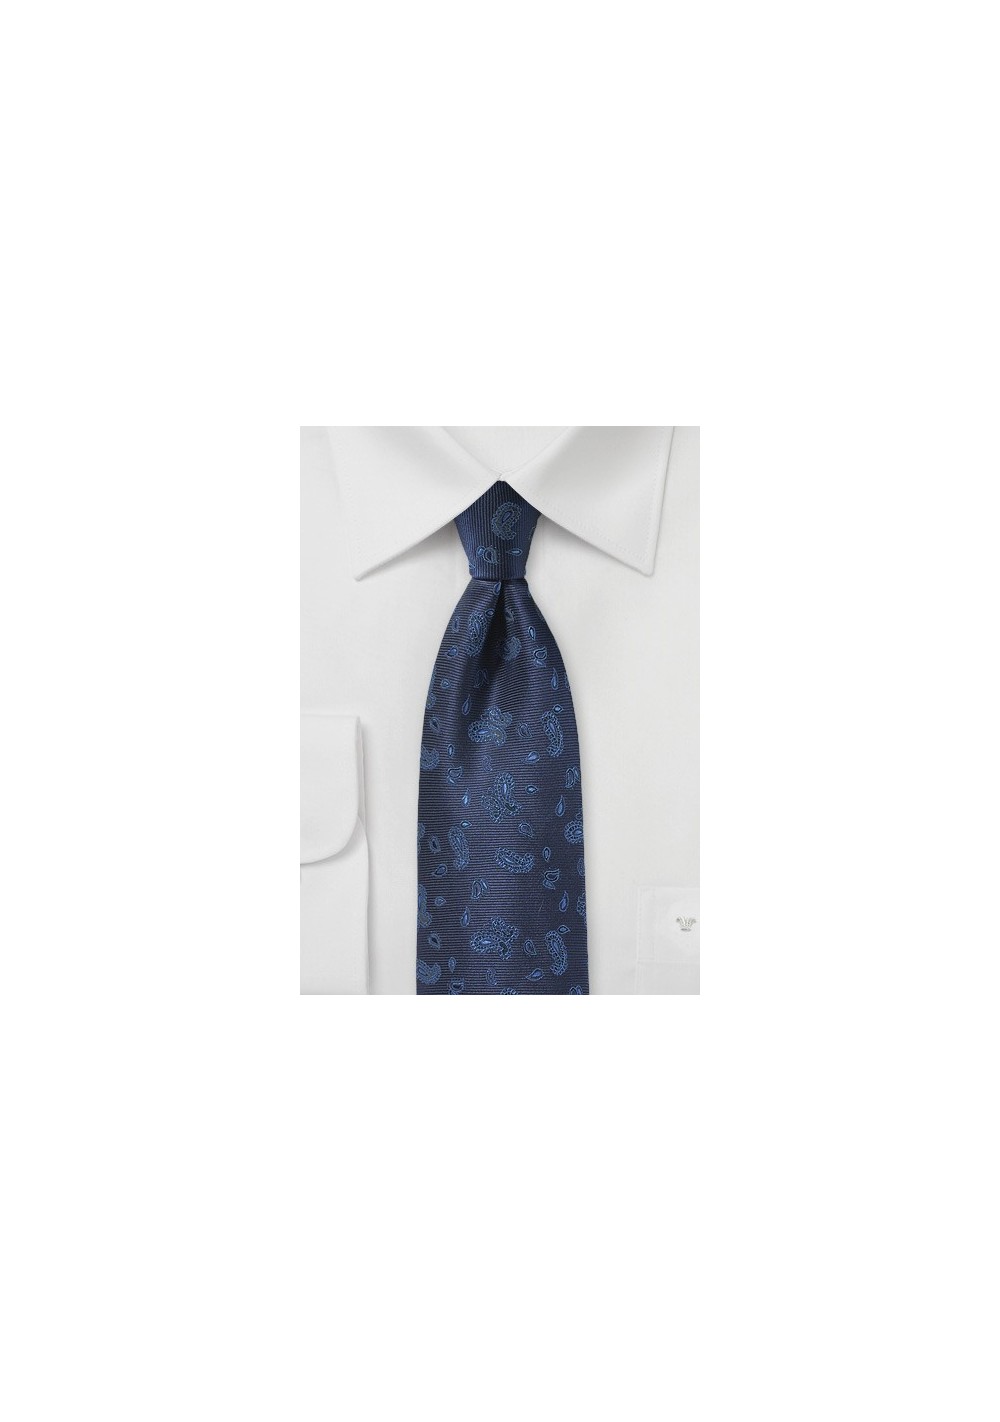 Woven Paisley Tie in Rich Blues